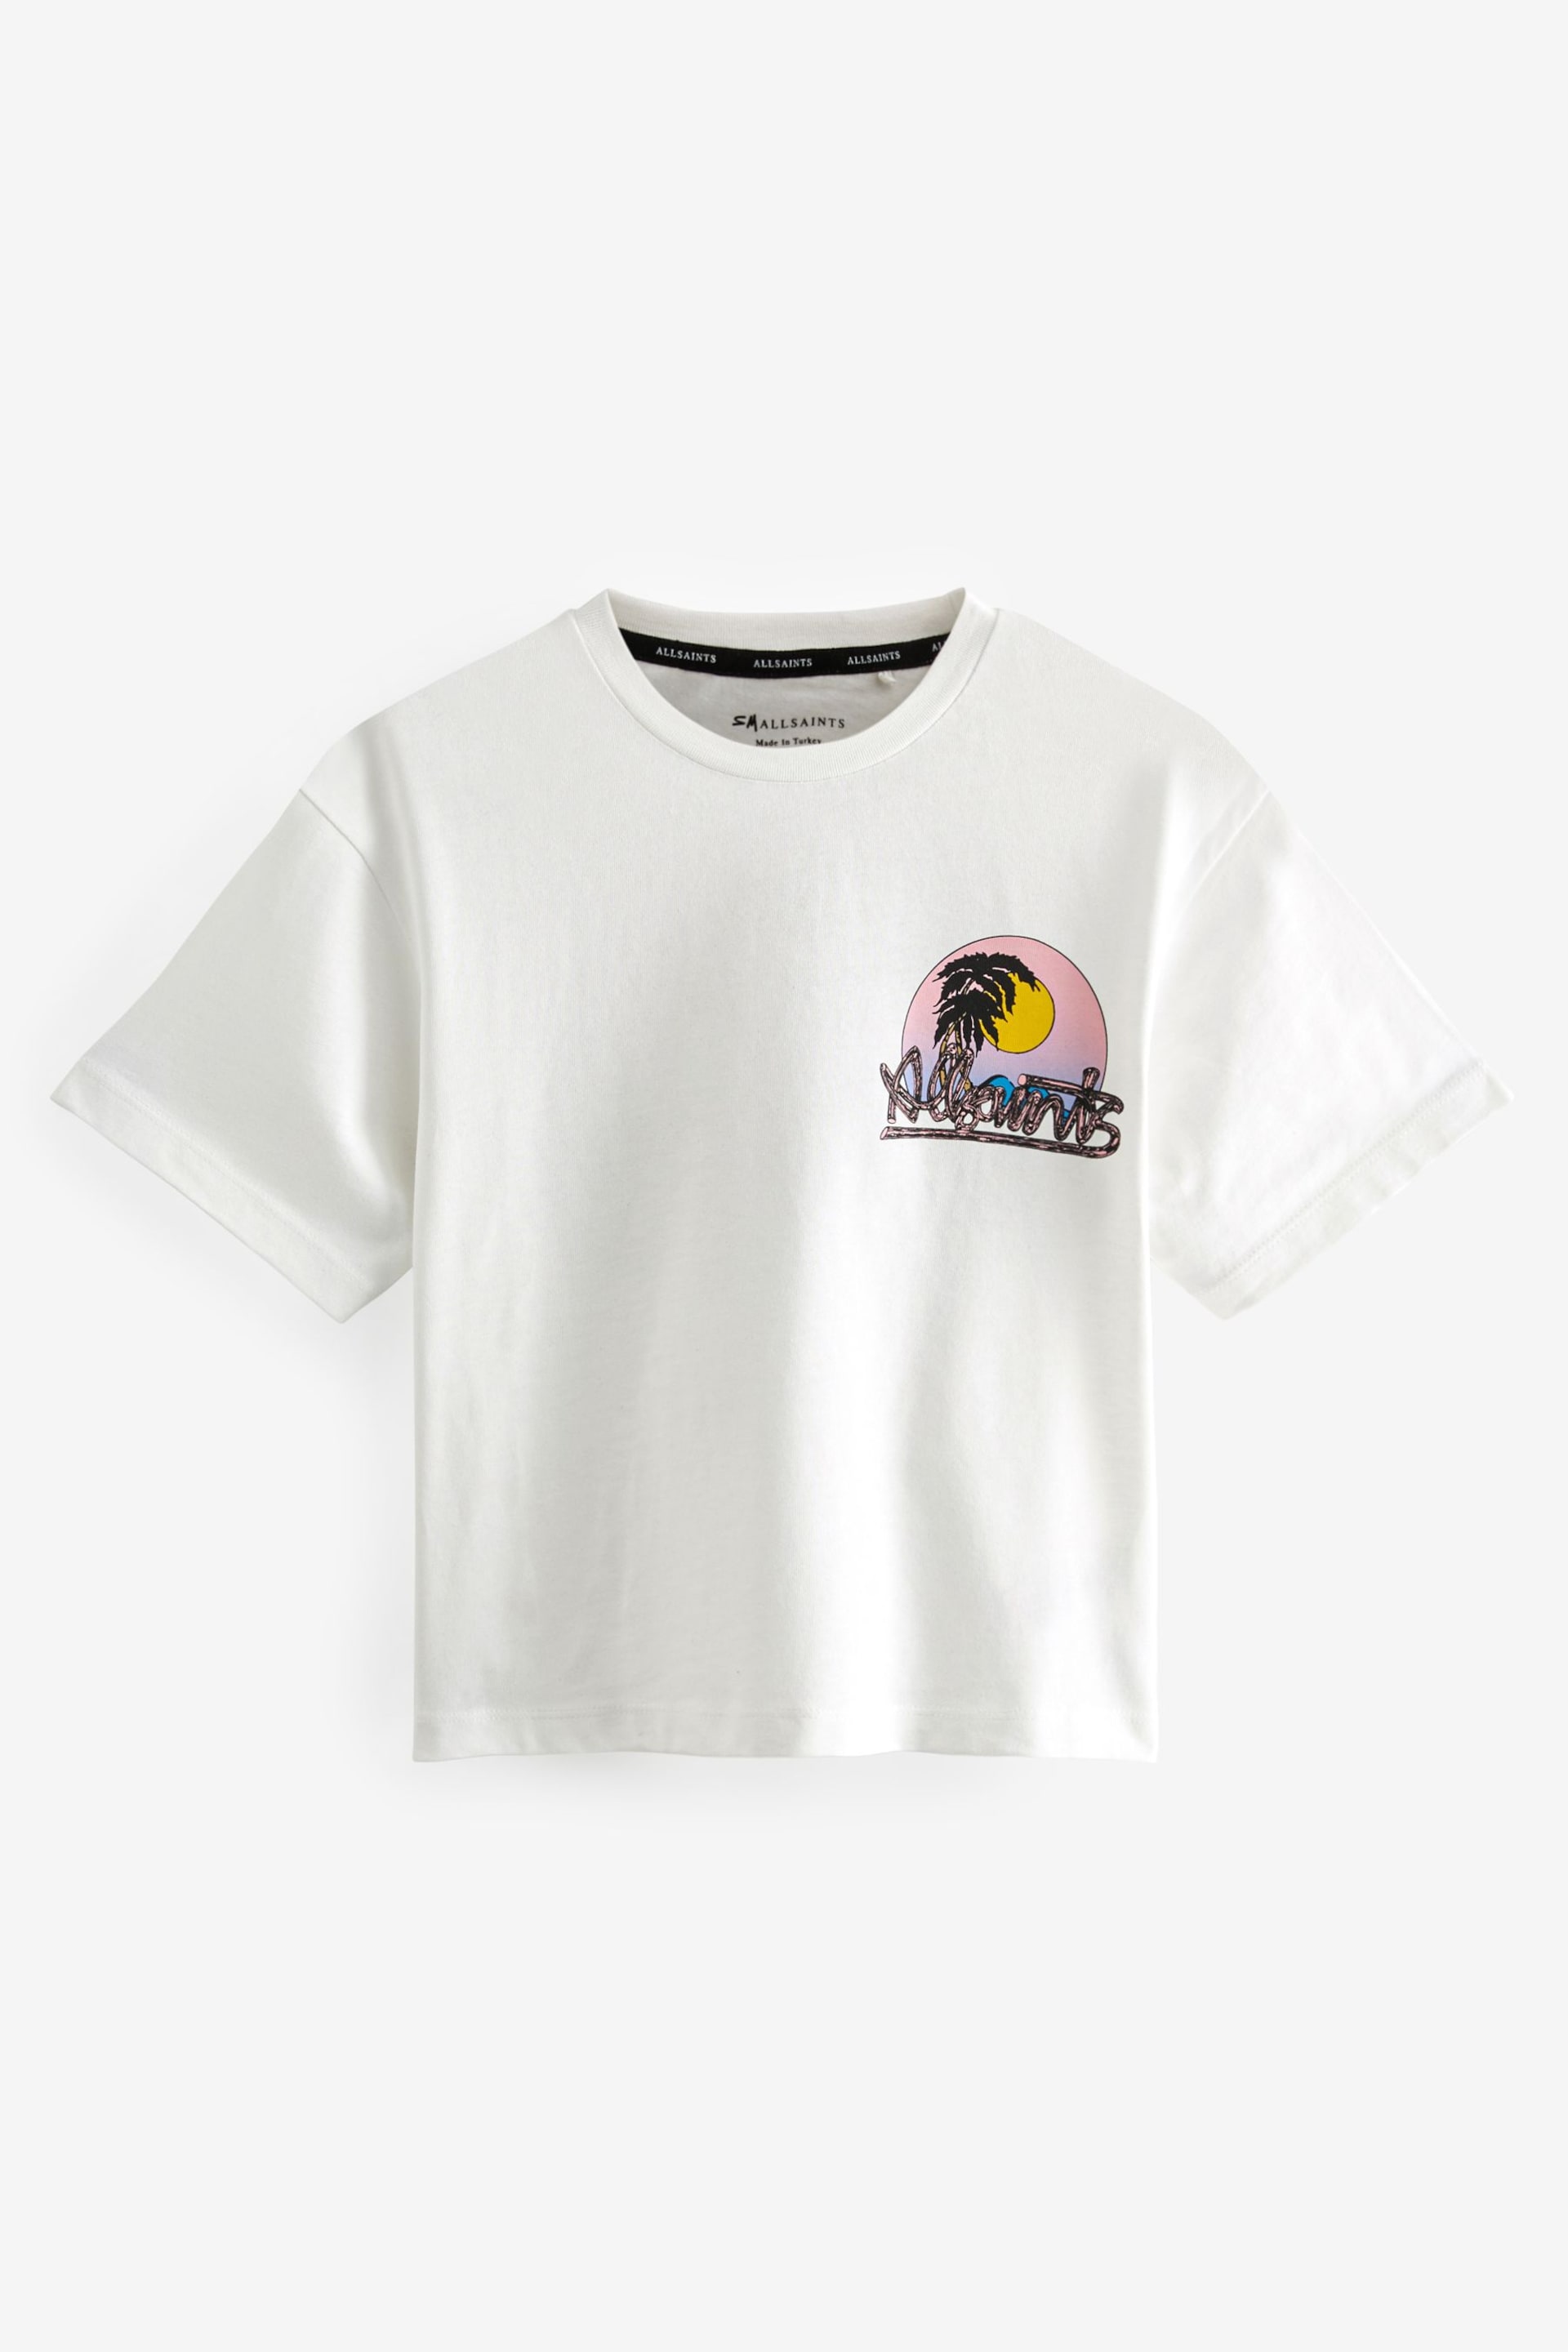 smALLSAINTS White/Chroma Boys Graphic Oversized Crew T-Shirt - Image 4 of 6